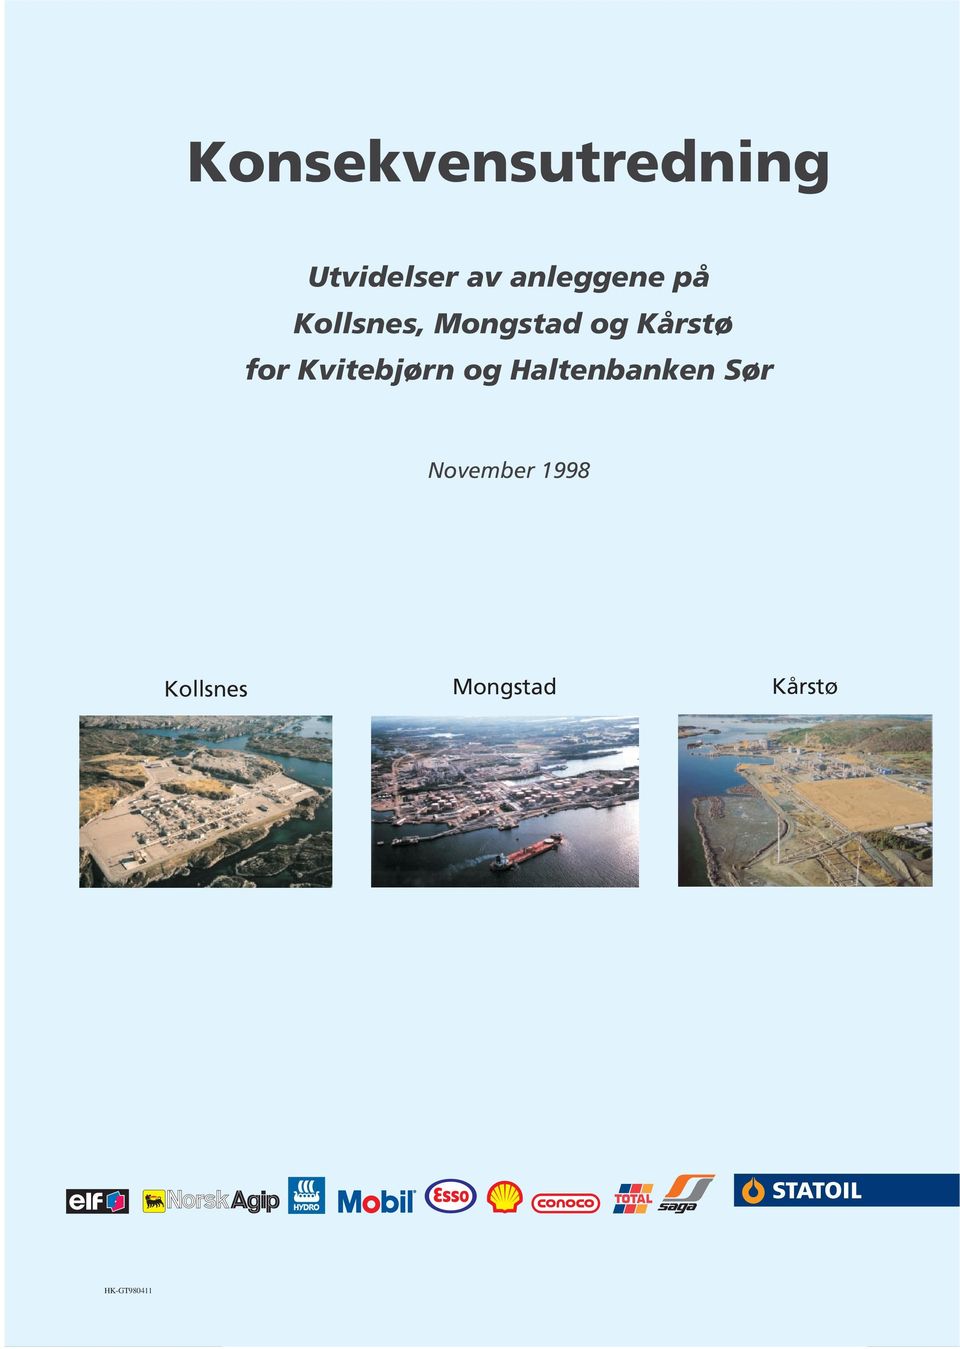 Kårstø for Kvitebjørn og Haltenbanken